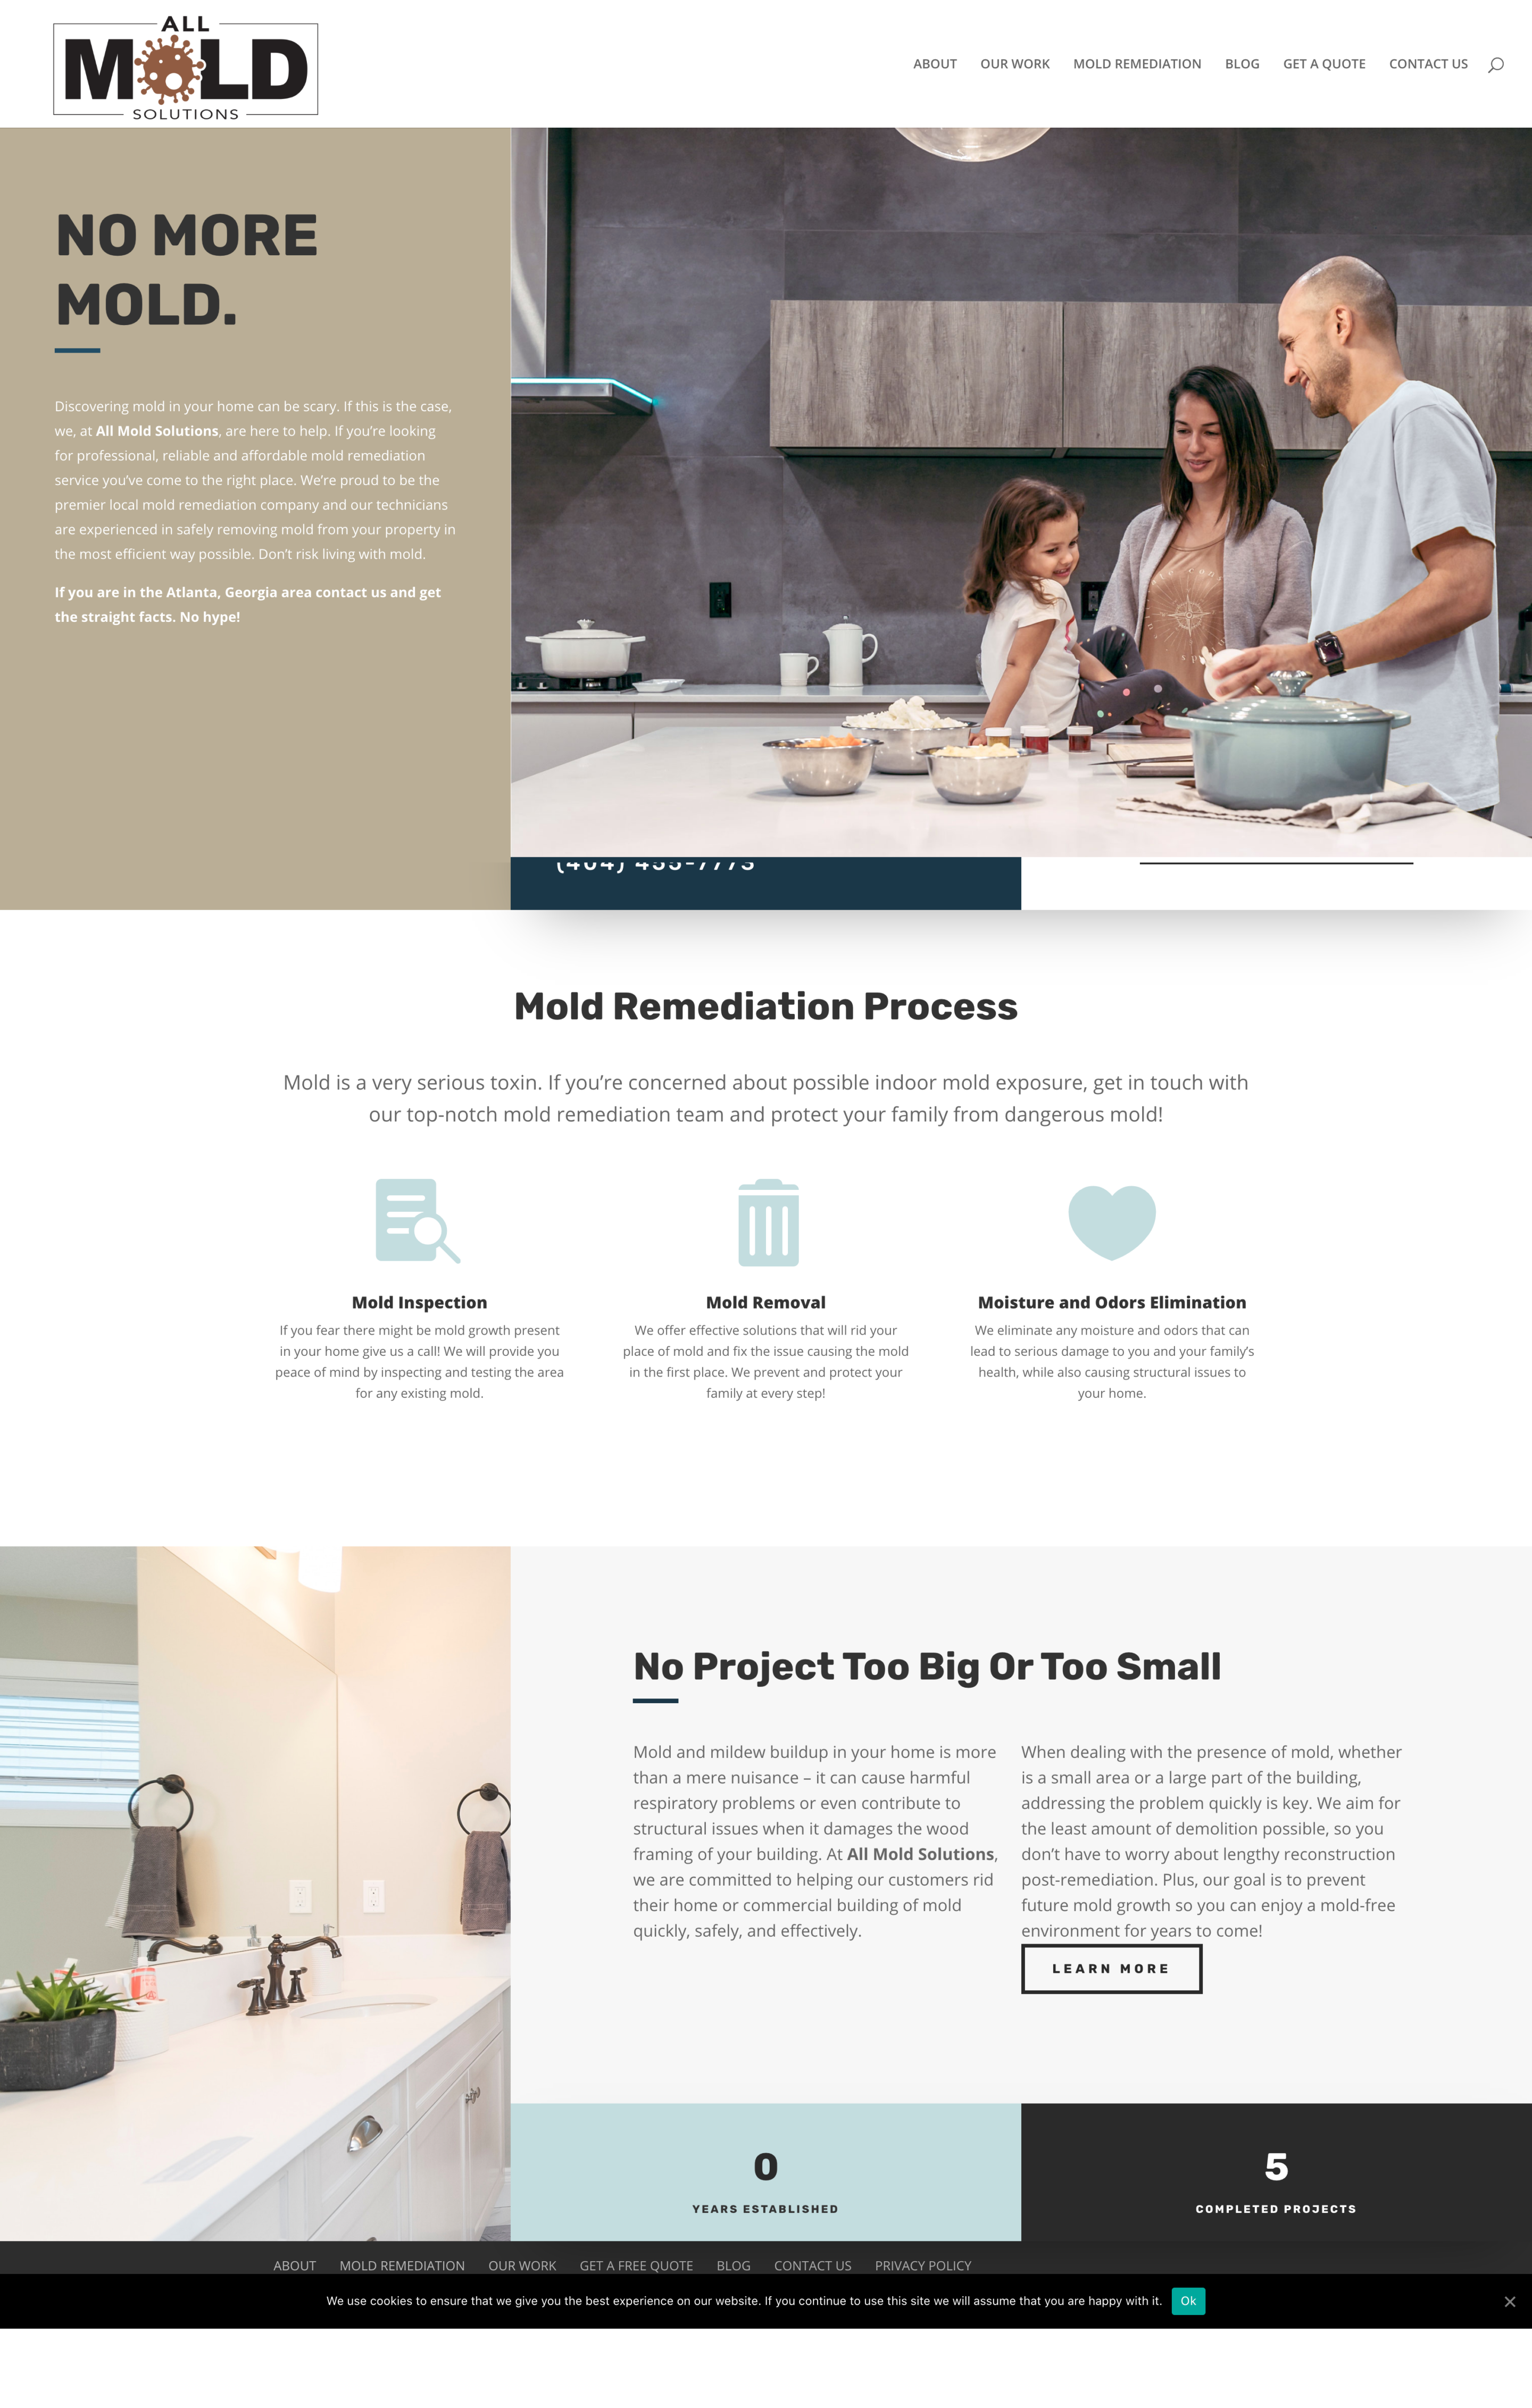 Wordpress website design for All Mold Solutions